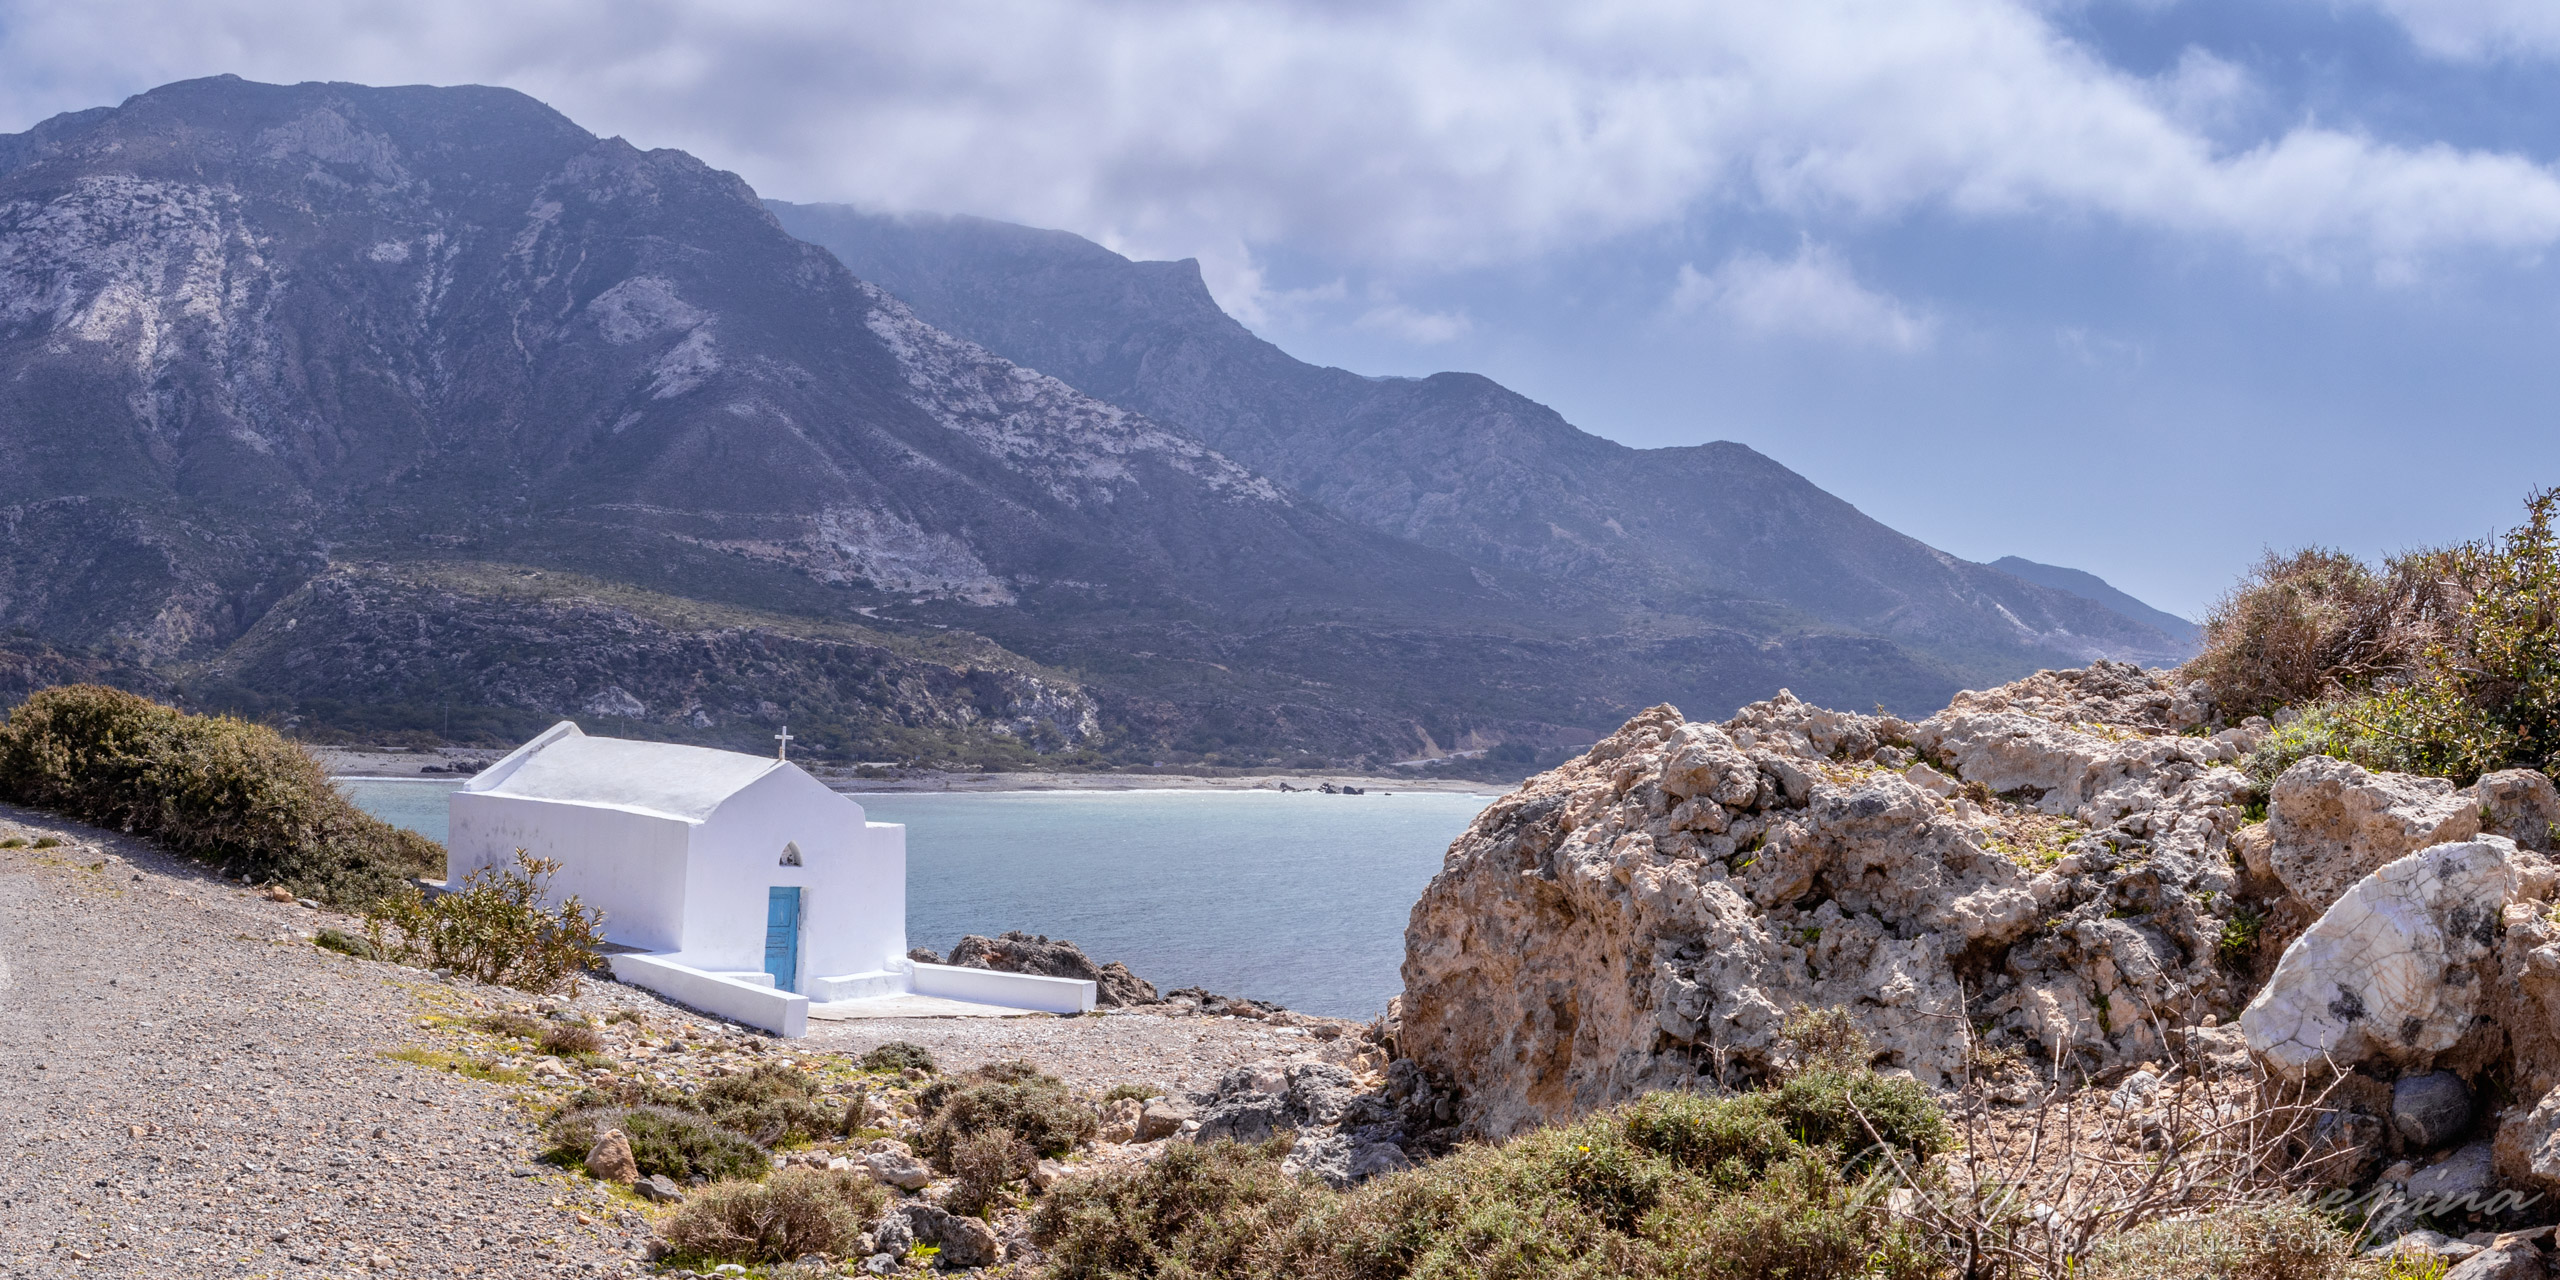 Greece, Crete, landscape, sea, church,  2x1 CR1-NB7B6A6537-P - Crete, Greece - Natalia Berezina Photography